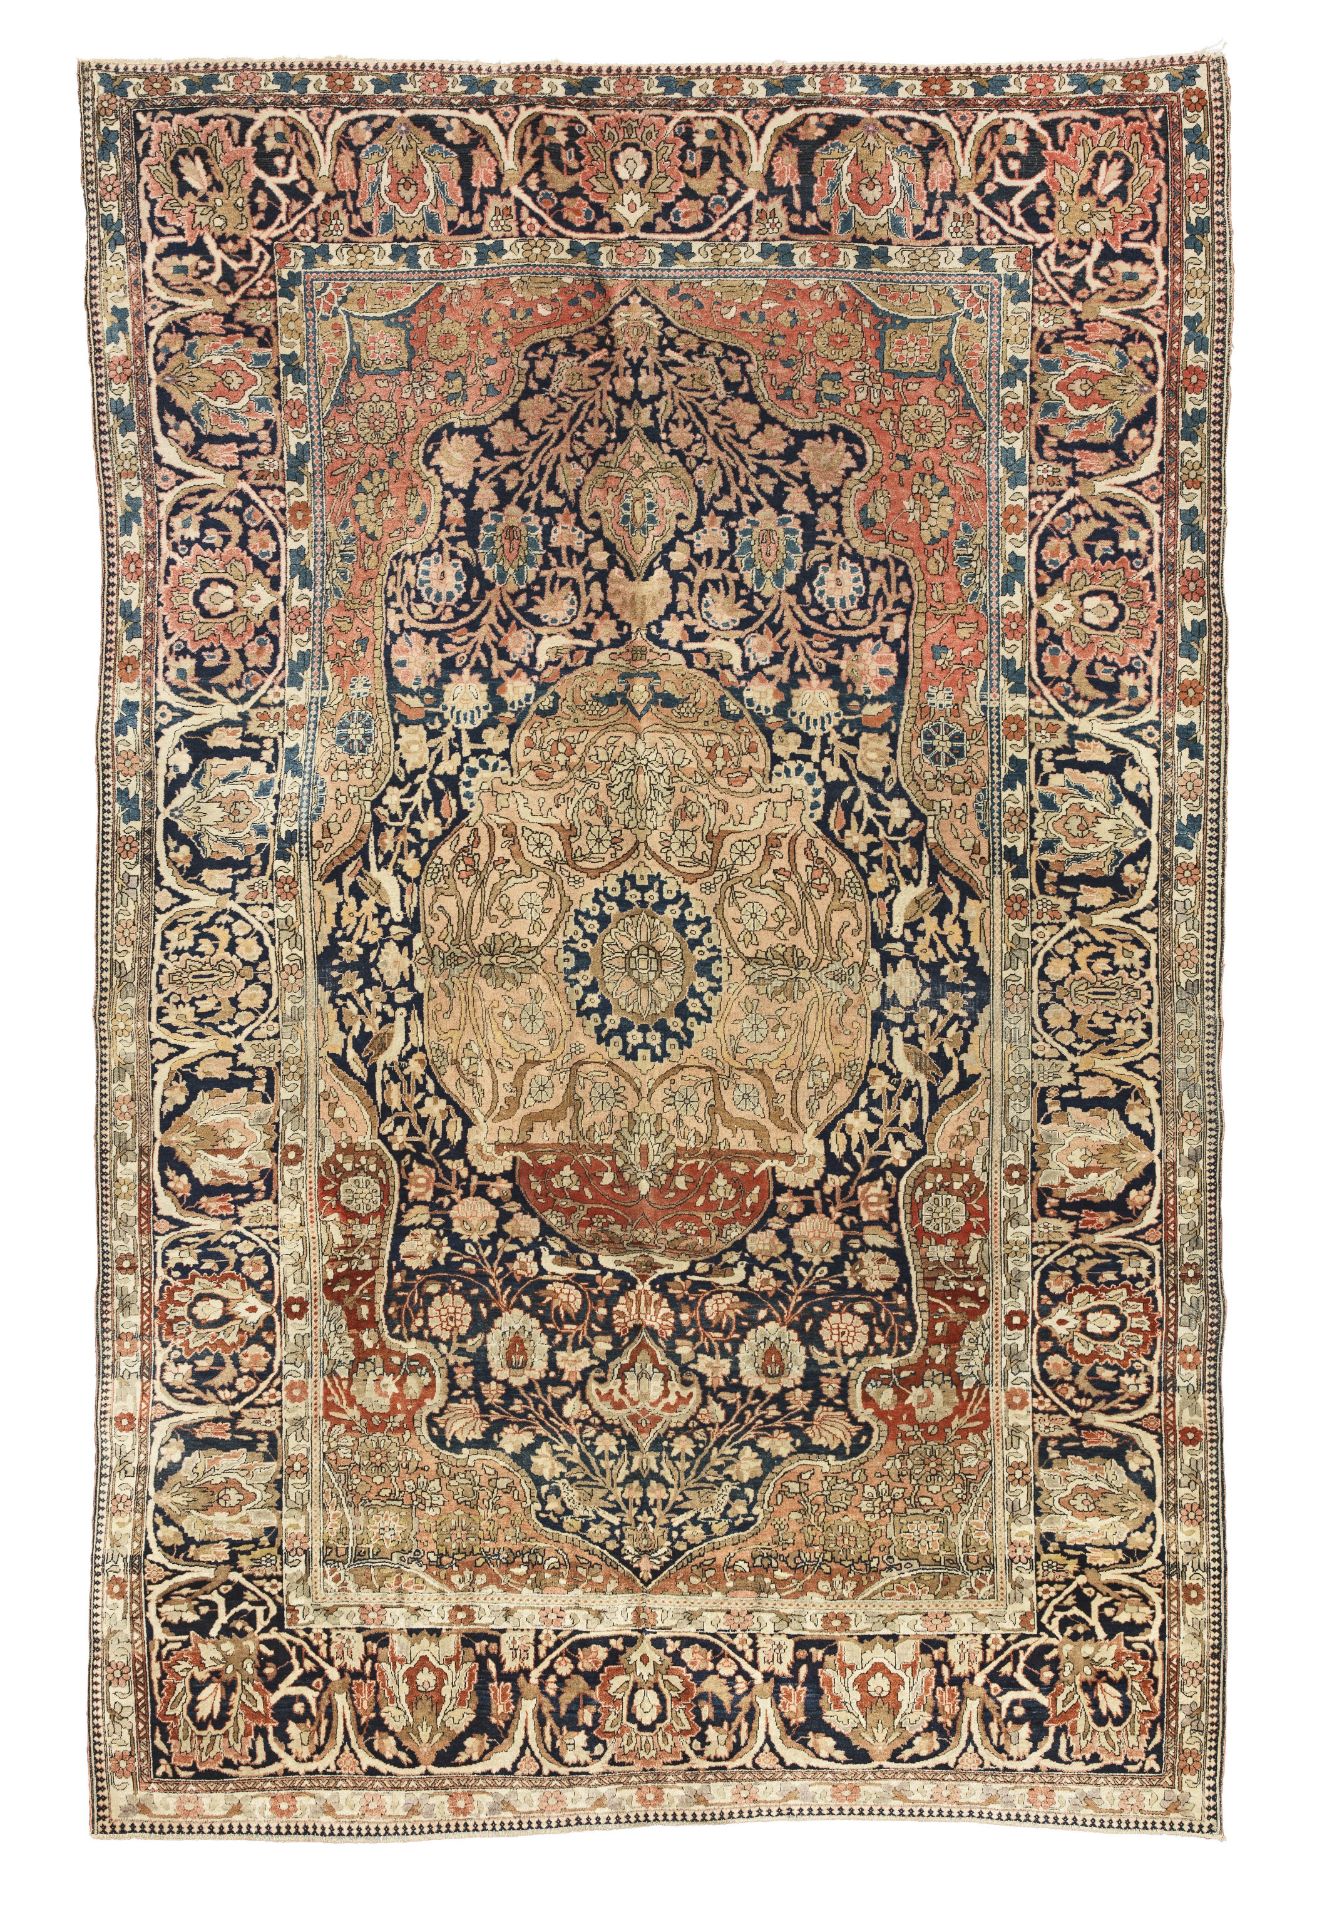 A Mohtasham Kashan carpet Central Persia, 200.5cm x 137.5cm